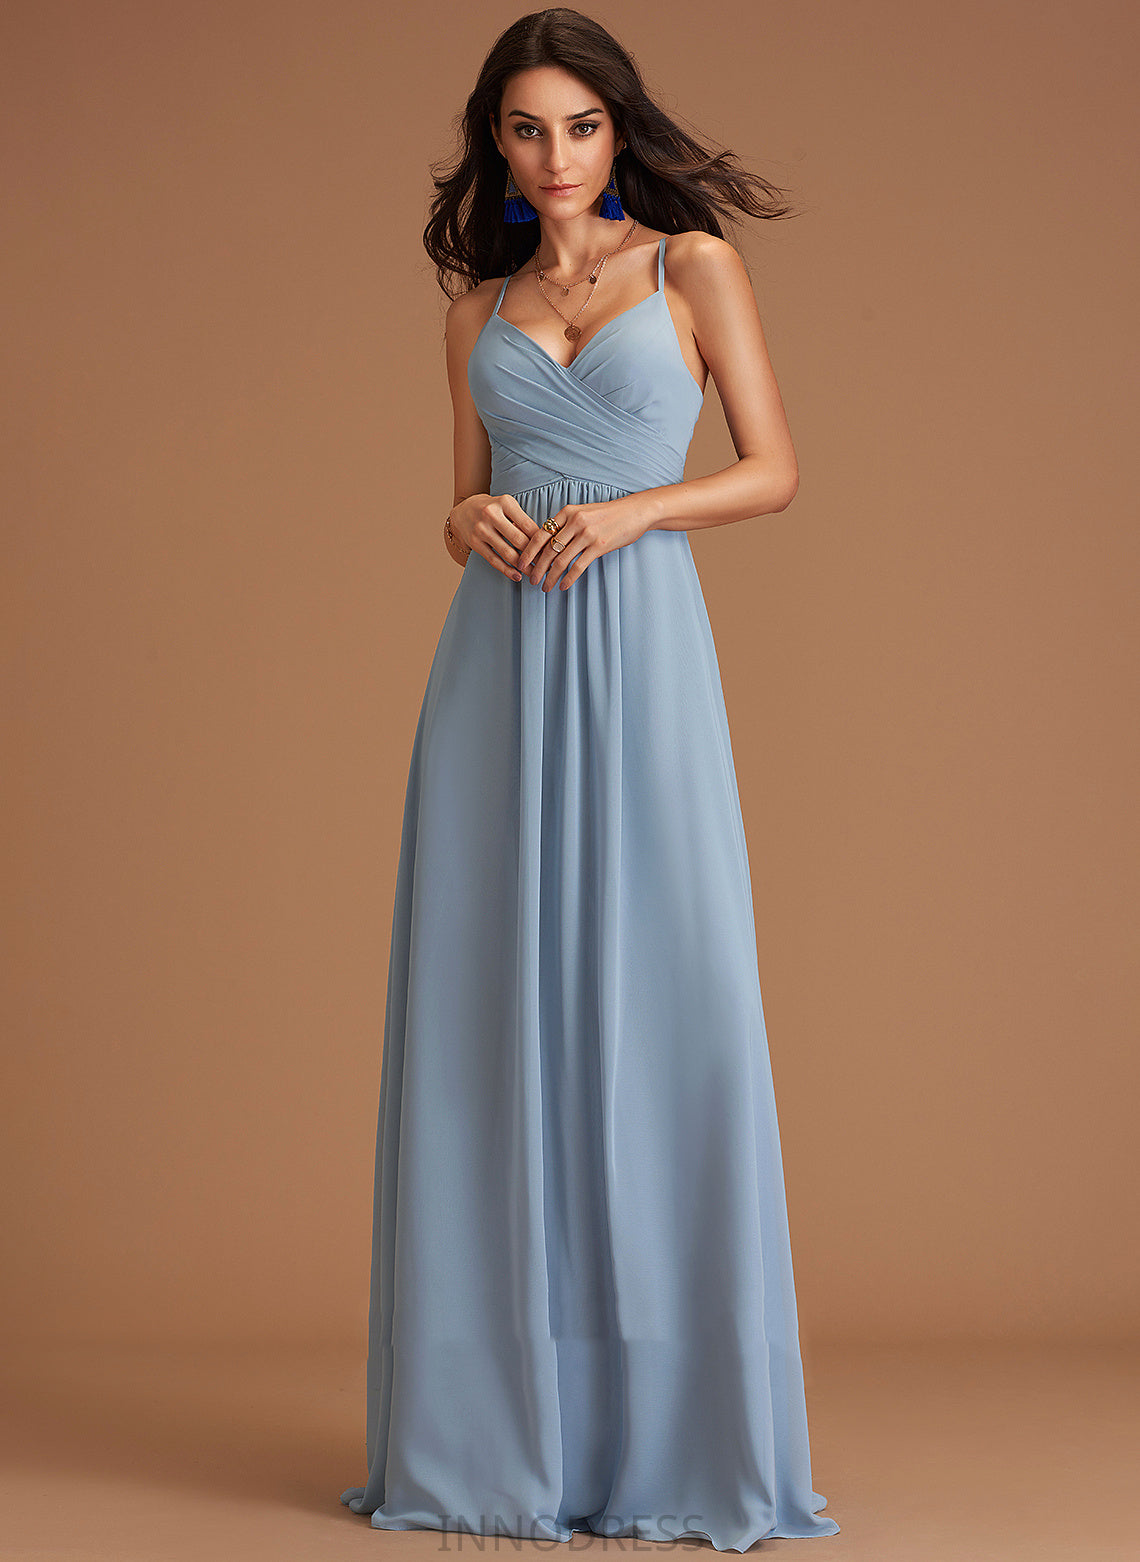 Embellishment Length A-Line Silhouette Ruffle V-neck Neckline Floor-Length Fabric Elsie Satin Trumpet/Mermaid Bridesmaid Dresses